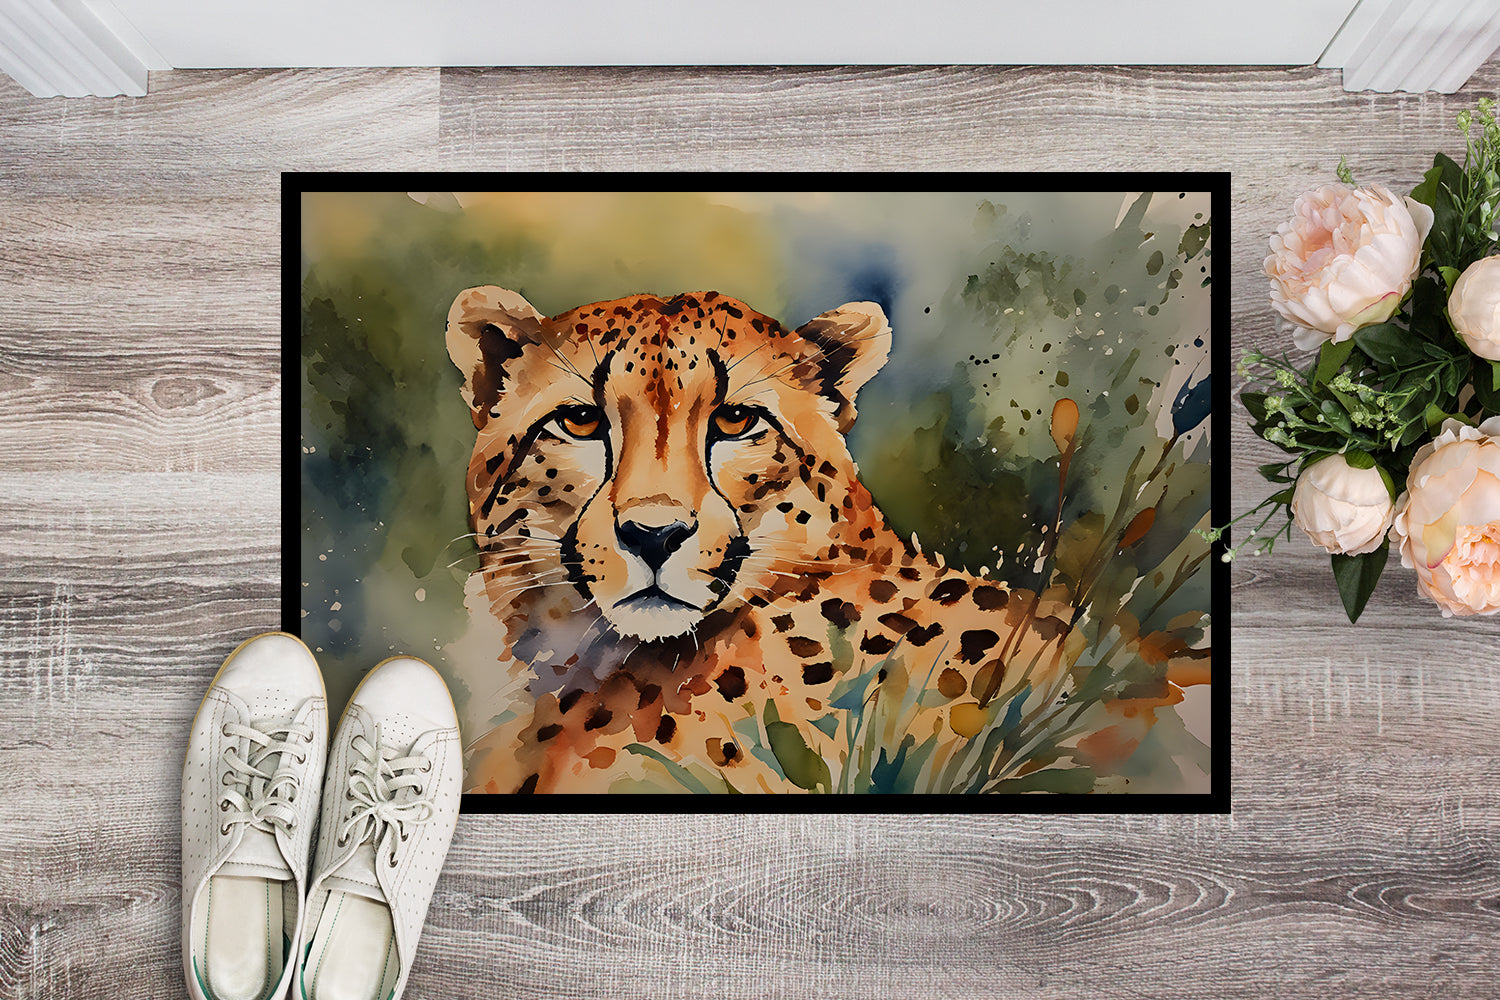 Buy this Cheetah Doormat